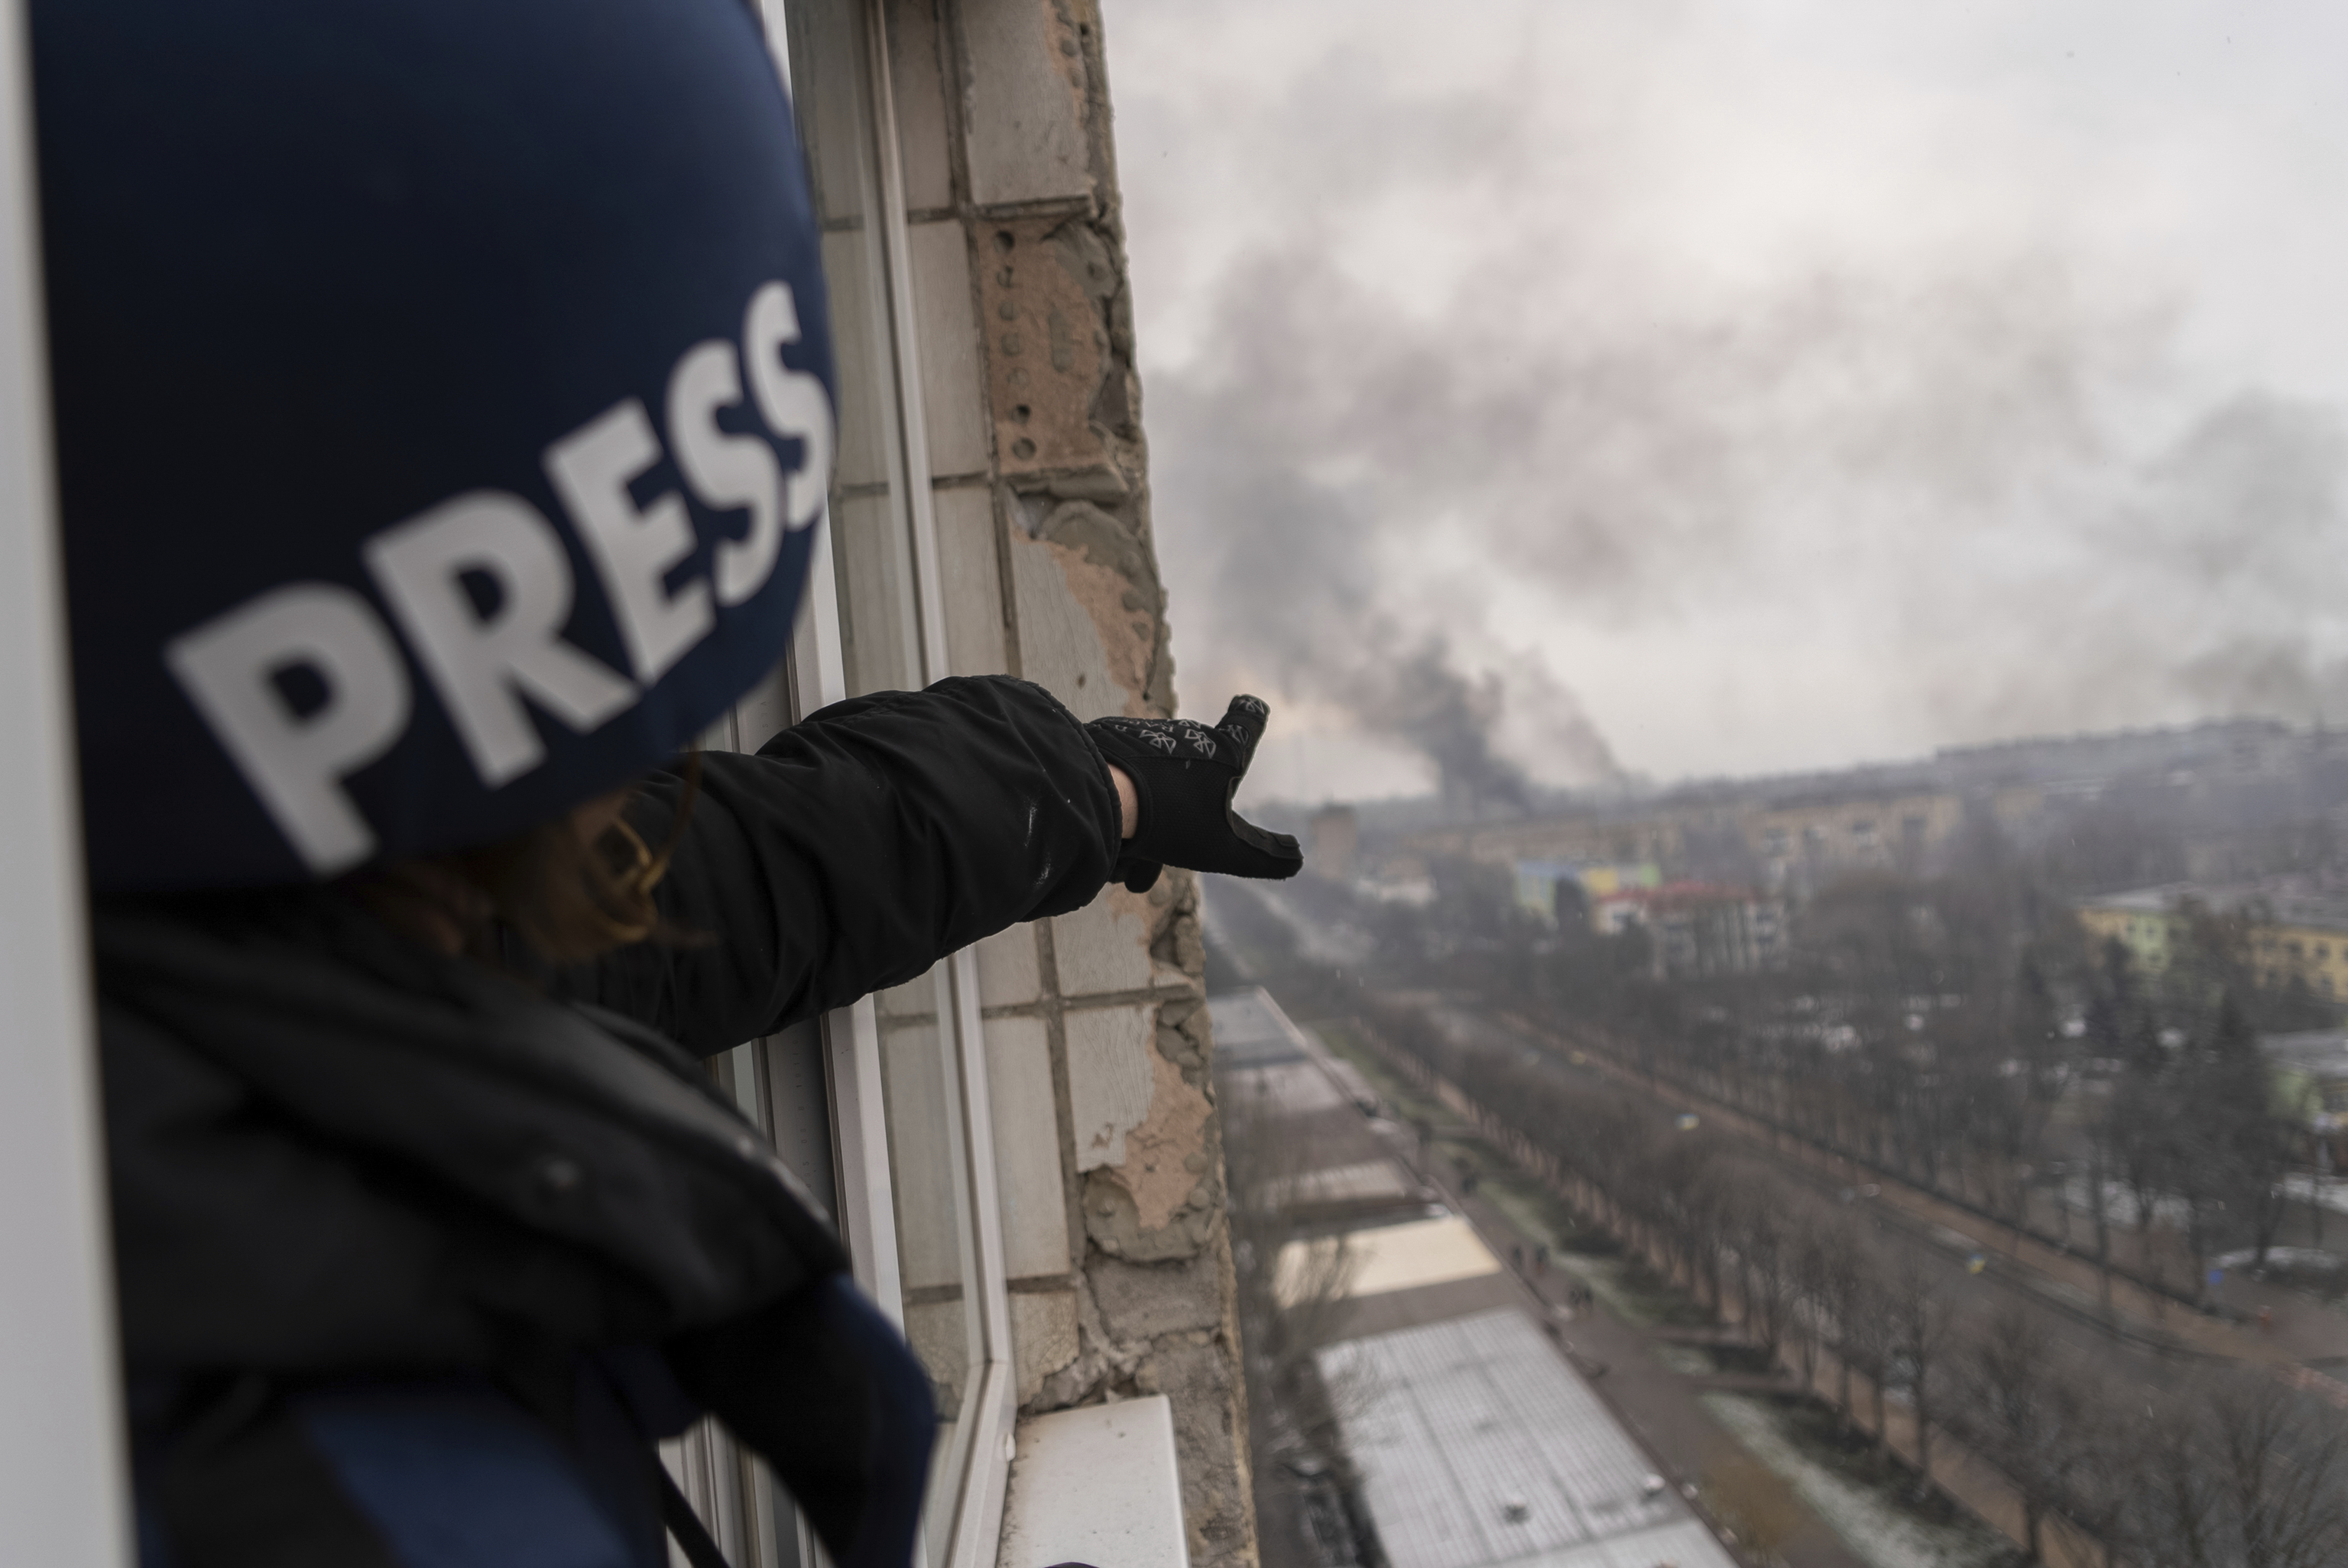 Torturar al periodista, 

otra nueva tctica rusa